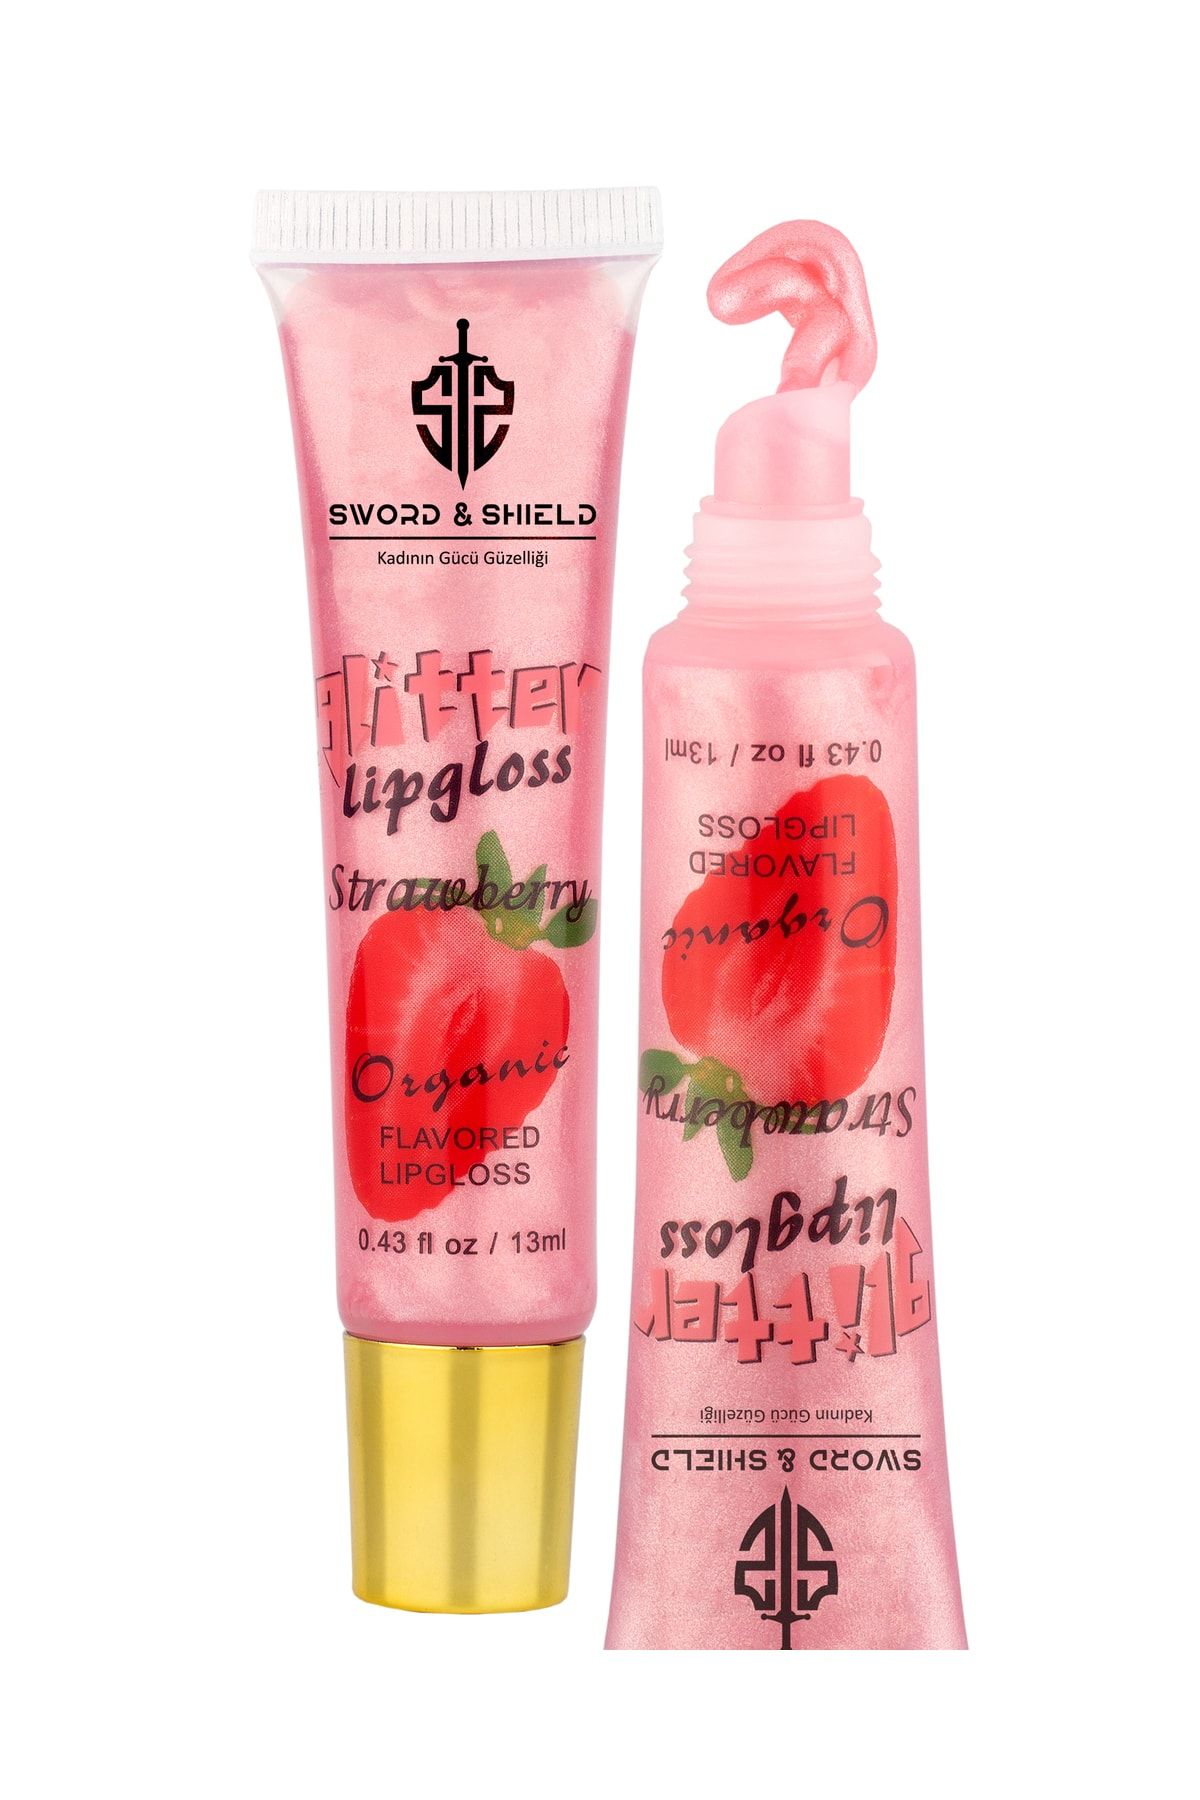 Sword & Shield S&s Glitter Lipgloss Strawberry